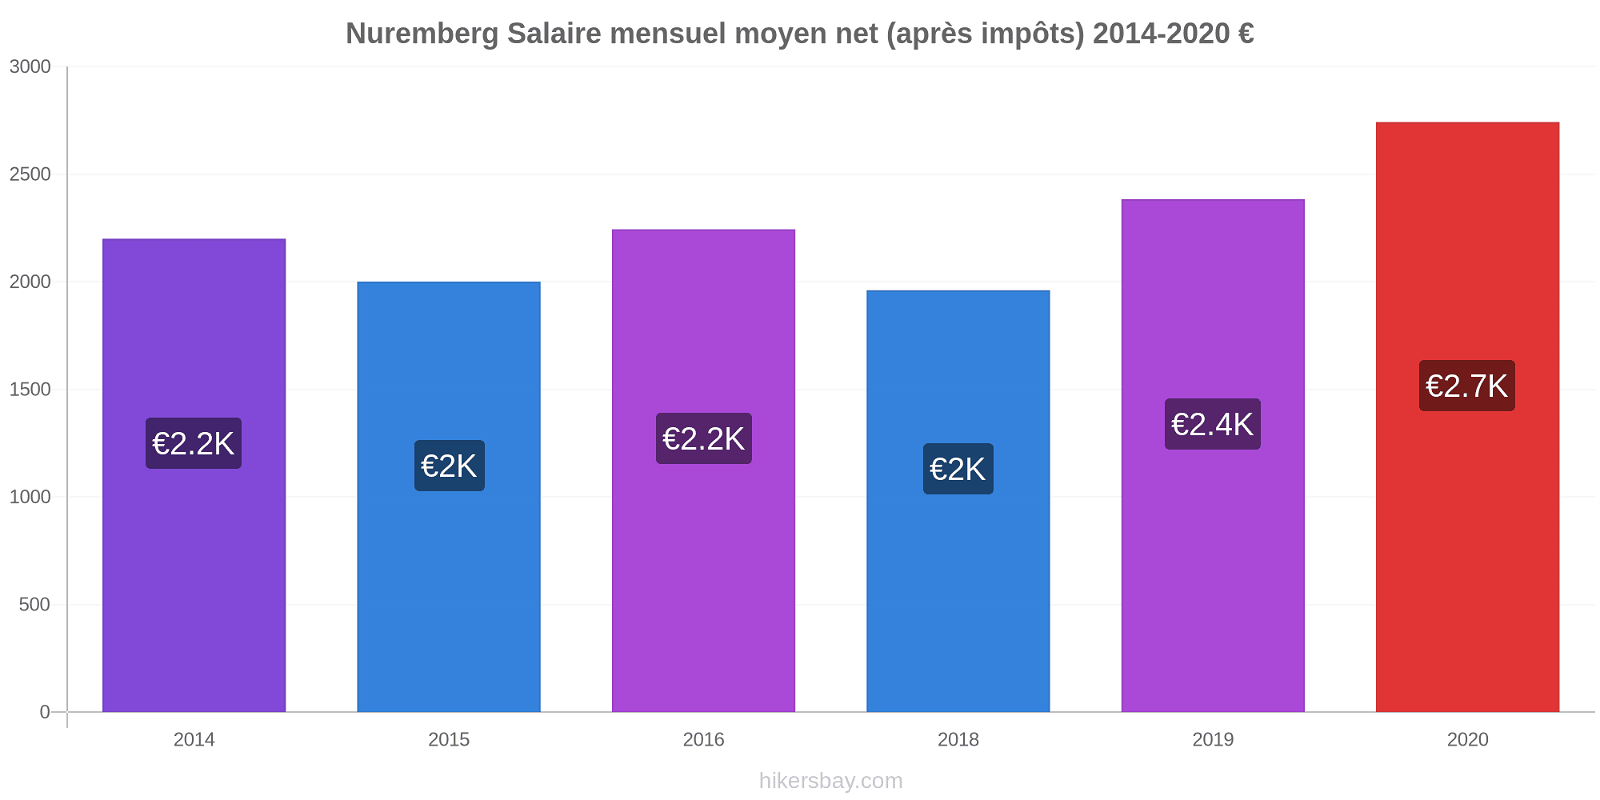 Nuremberg changements de prix Salaire mensuel Net (après impôts) hikersbay.com